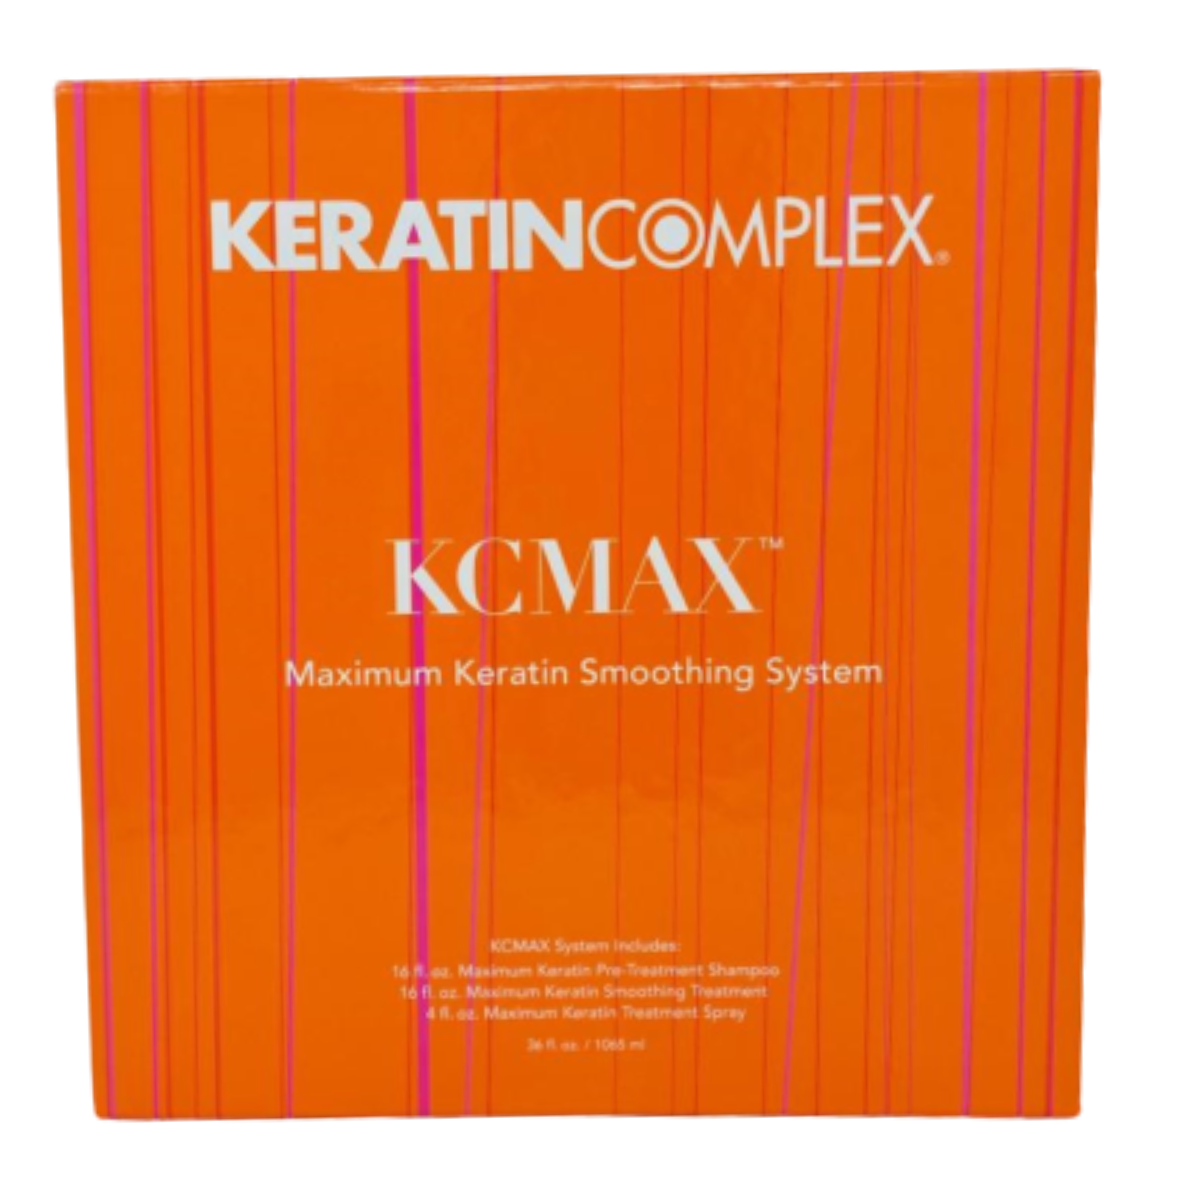 Keratin Complex KCMAX Maximum Keratin Smoothing System 16 oz